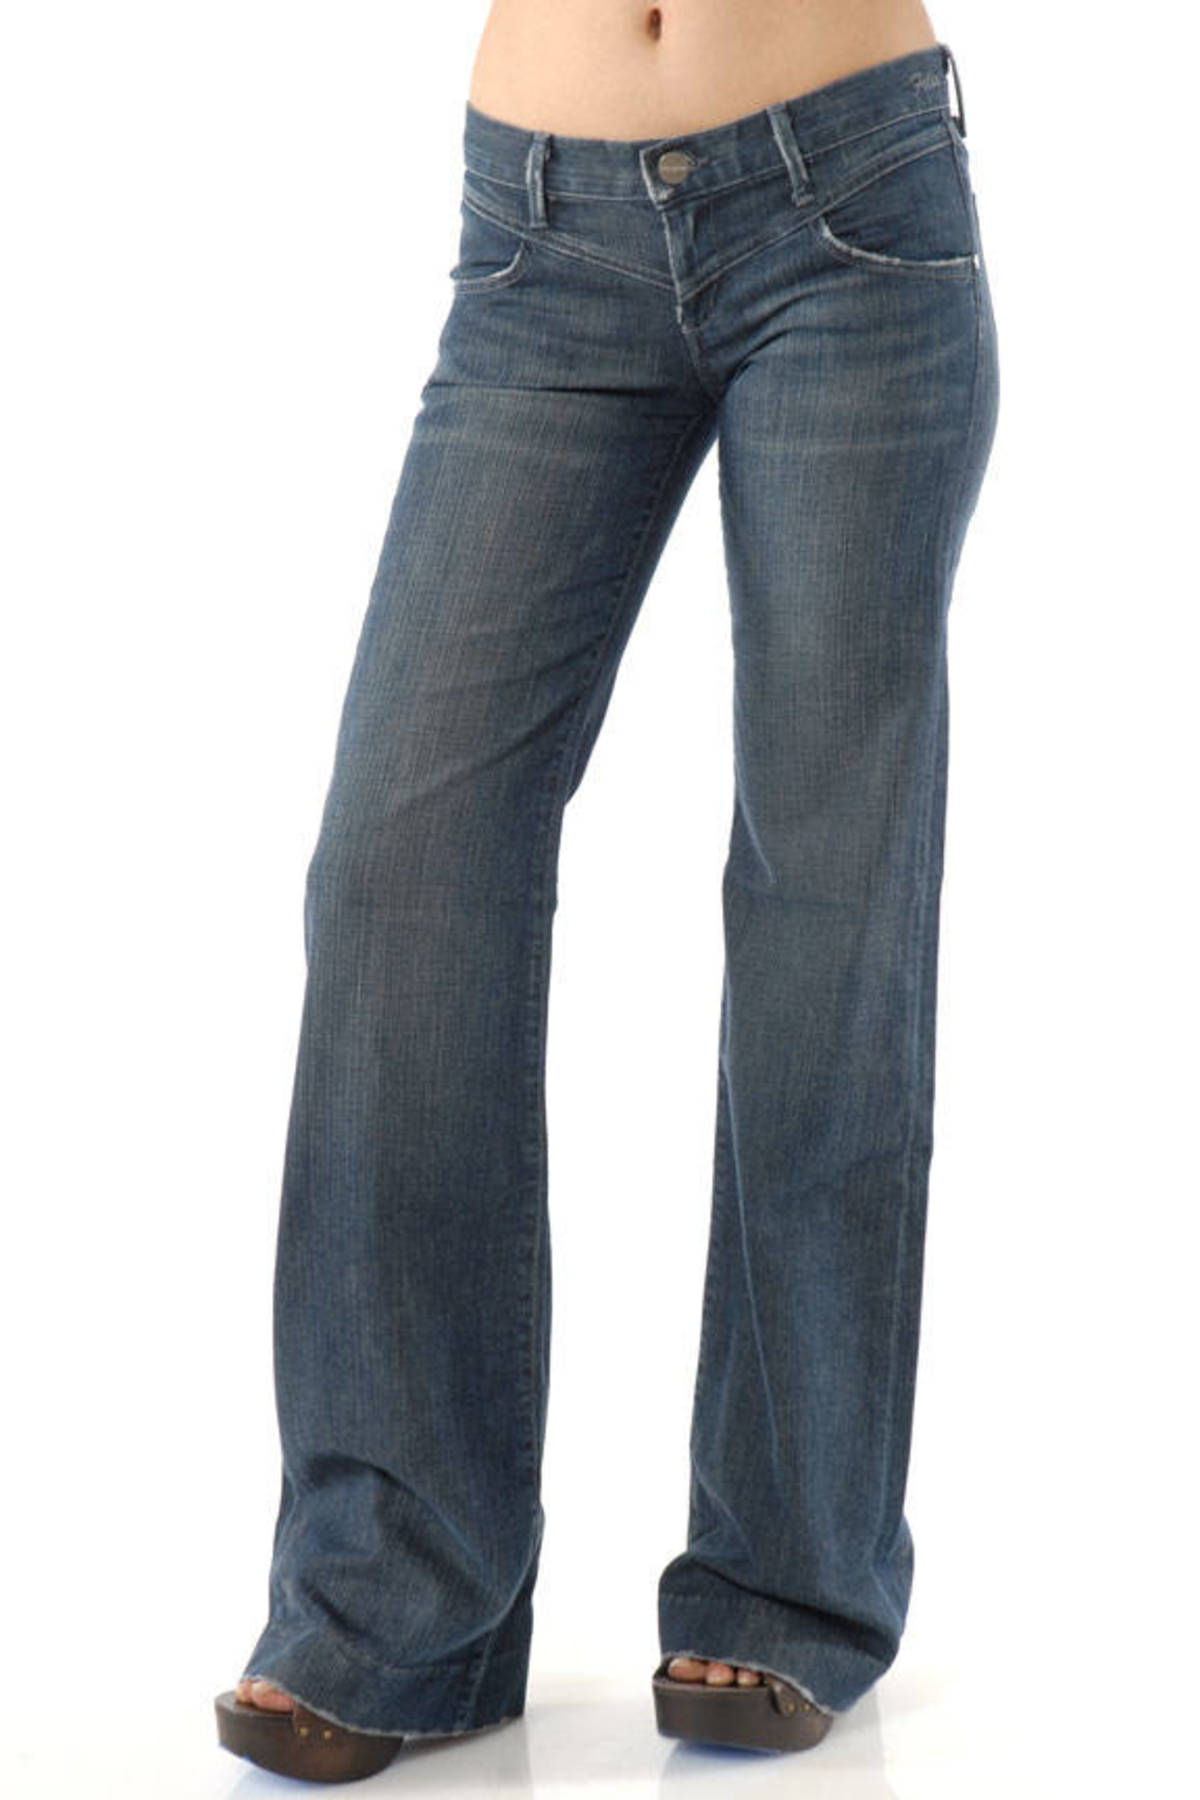 Felix Bootcut Jeans in Bora - $56 | Tobi US